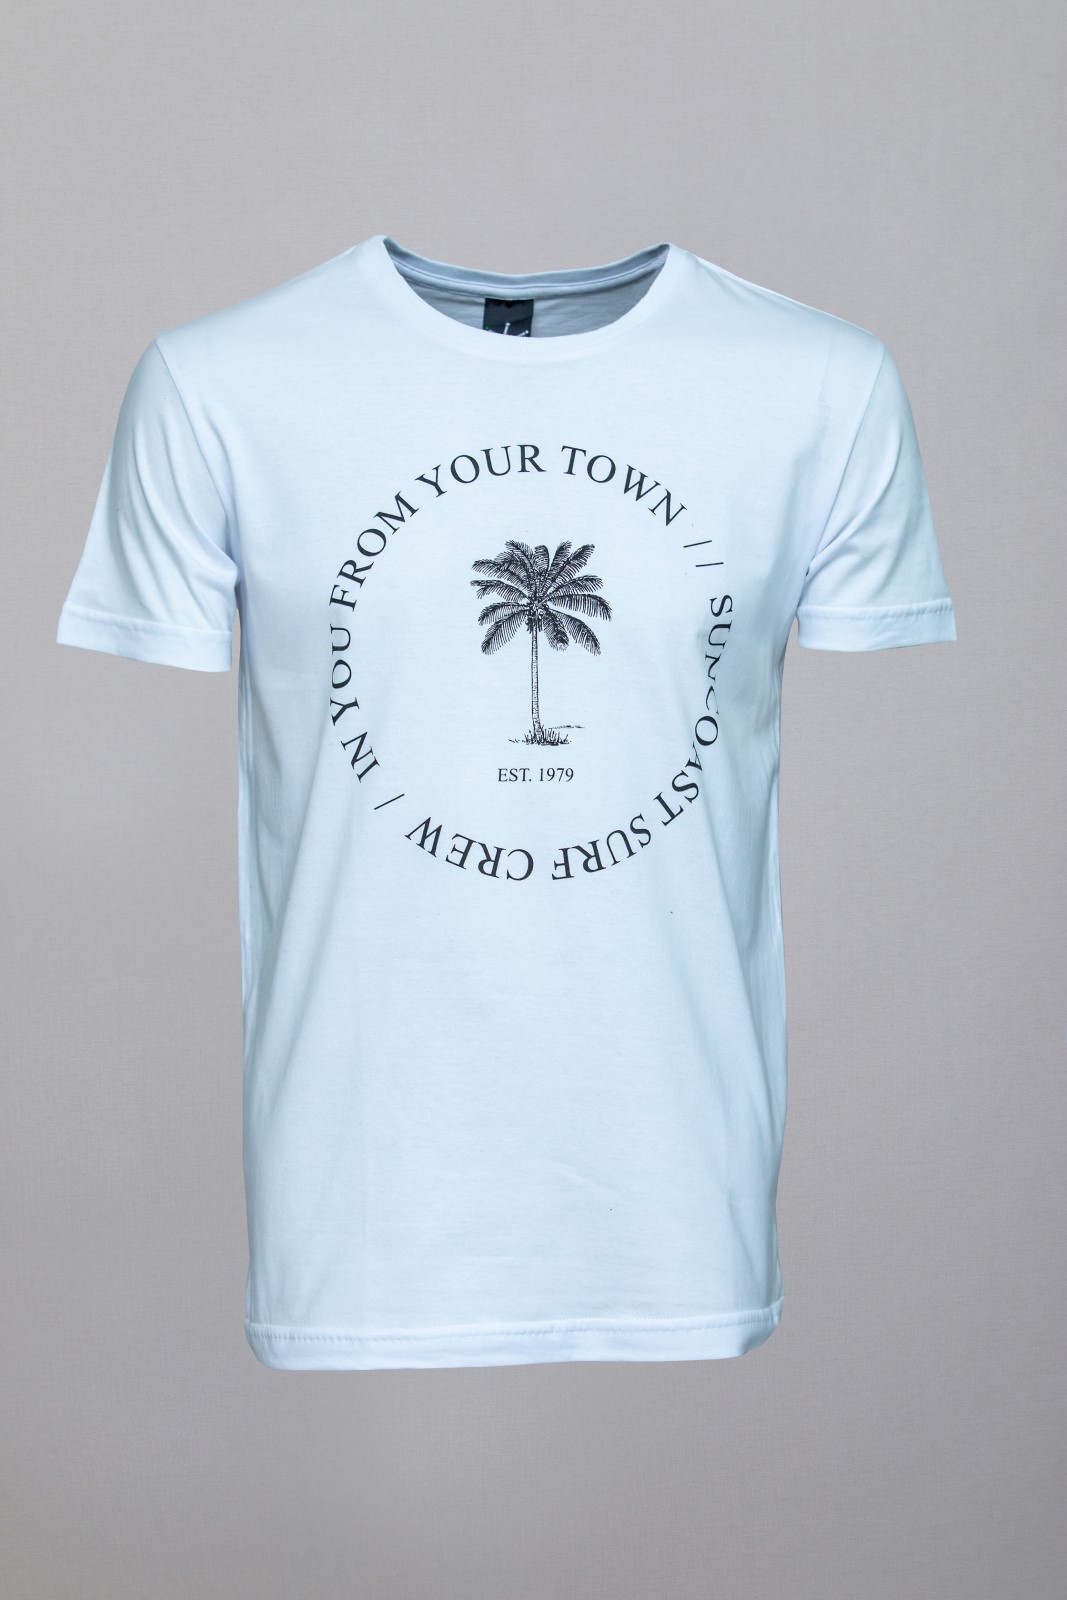 Camiseta CoolWave Costa do Sol